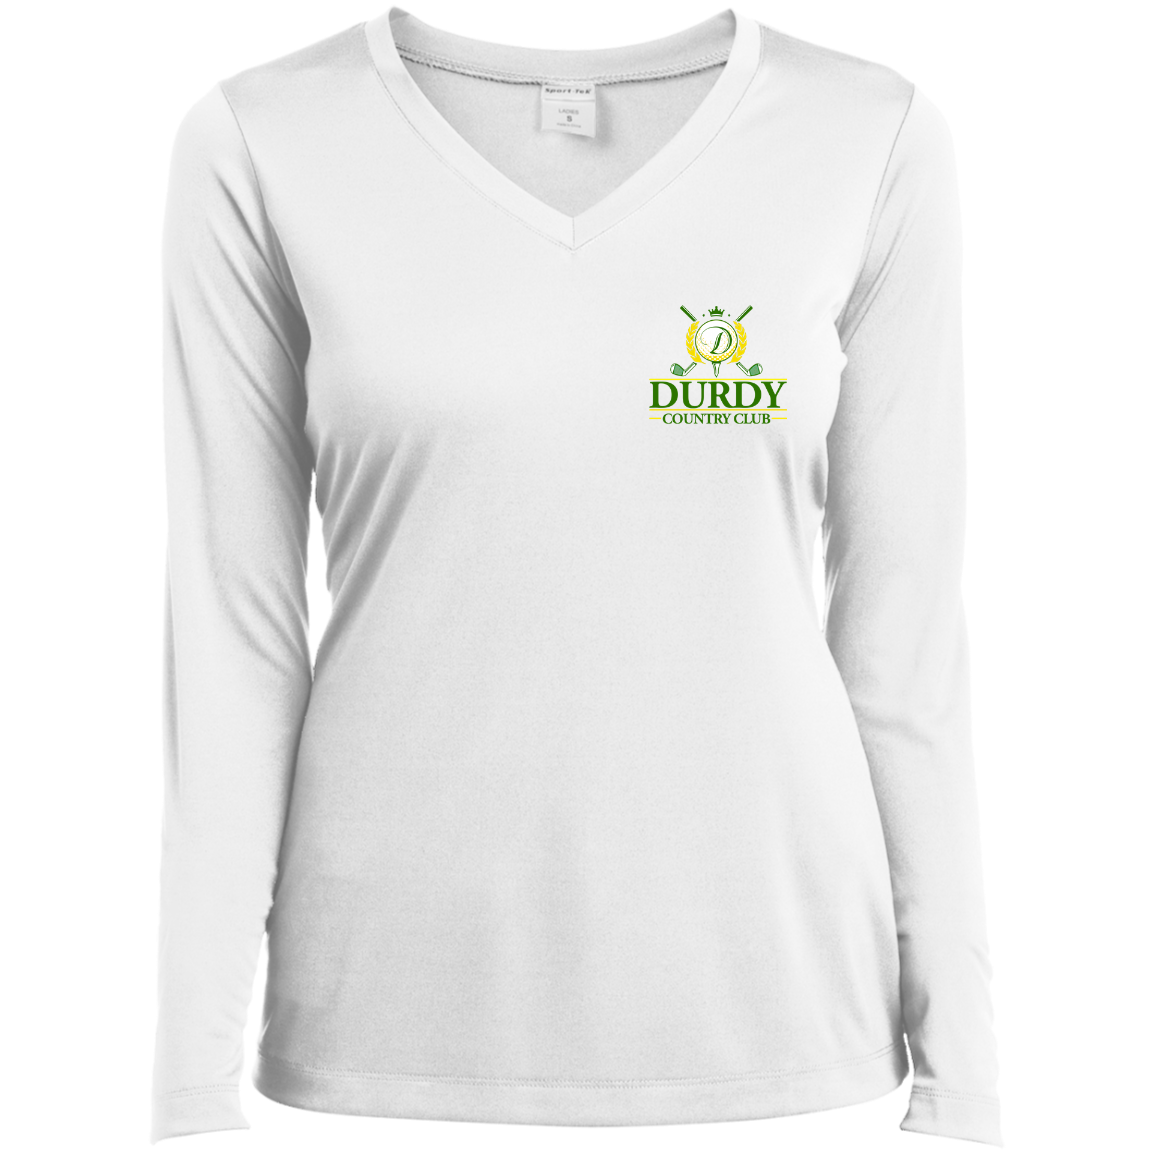 Durdy Country Club Sport-Tek Ladies' LS Performance V-Neck T-Shirt